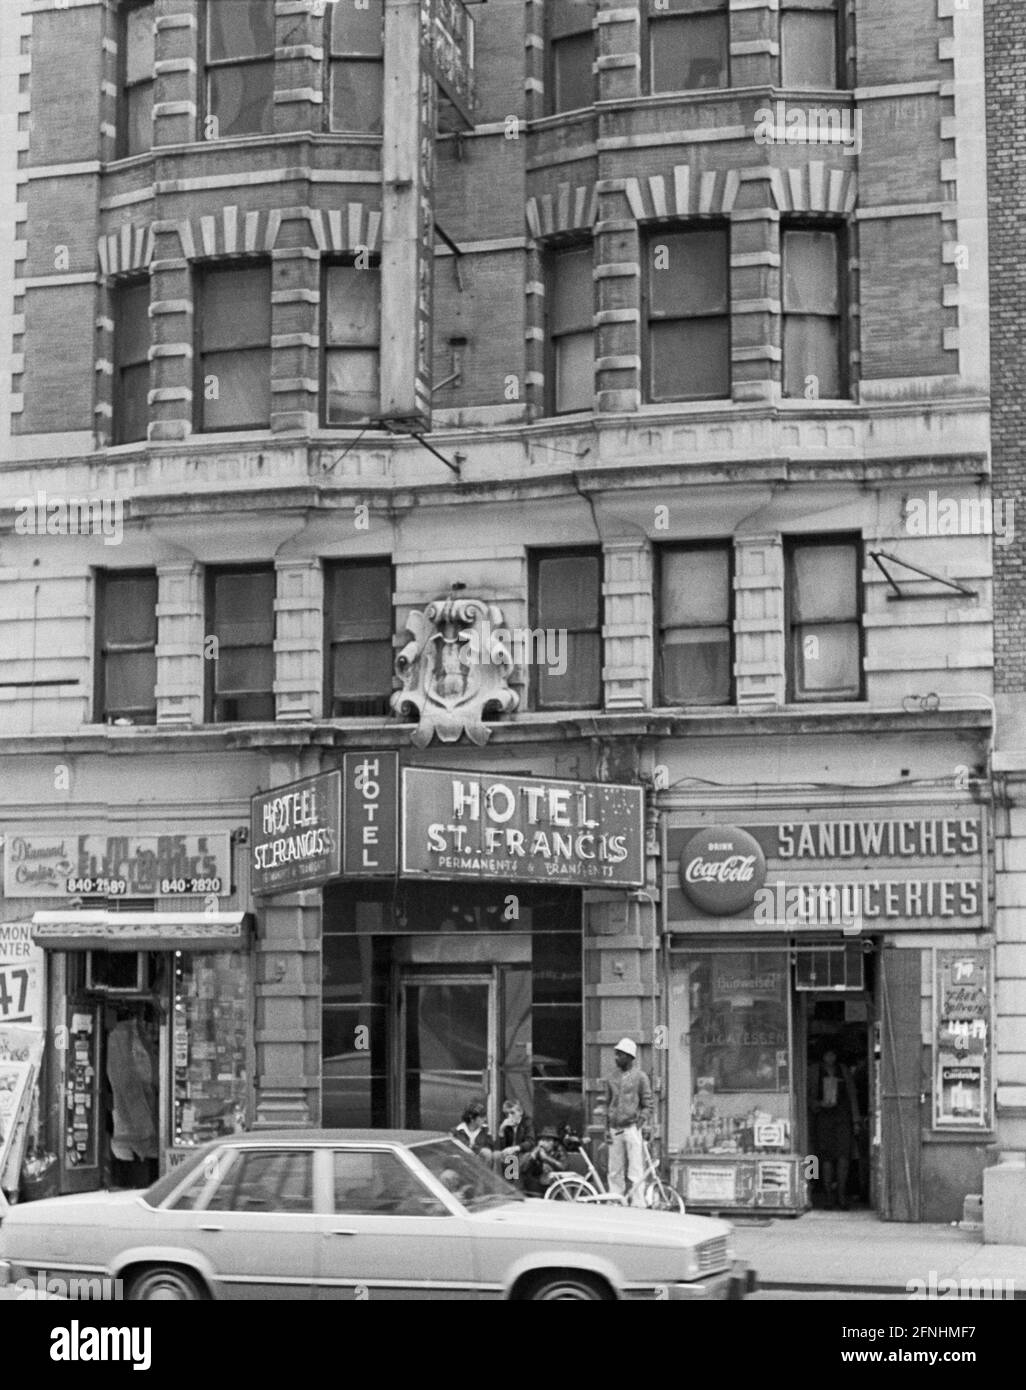 New York City Photo Essay, 30 aprile 1981 - Hotel St. Francis per residenti permanenti e transitori. Broadway e West 47th Street, Diamond Center, Manhattan. Foto Stock